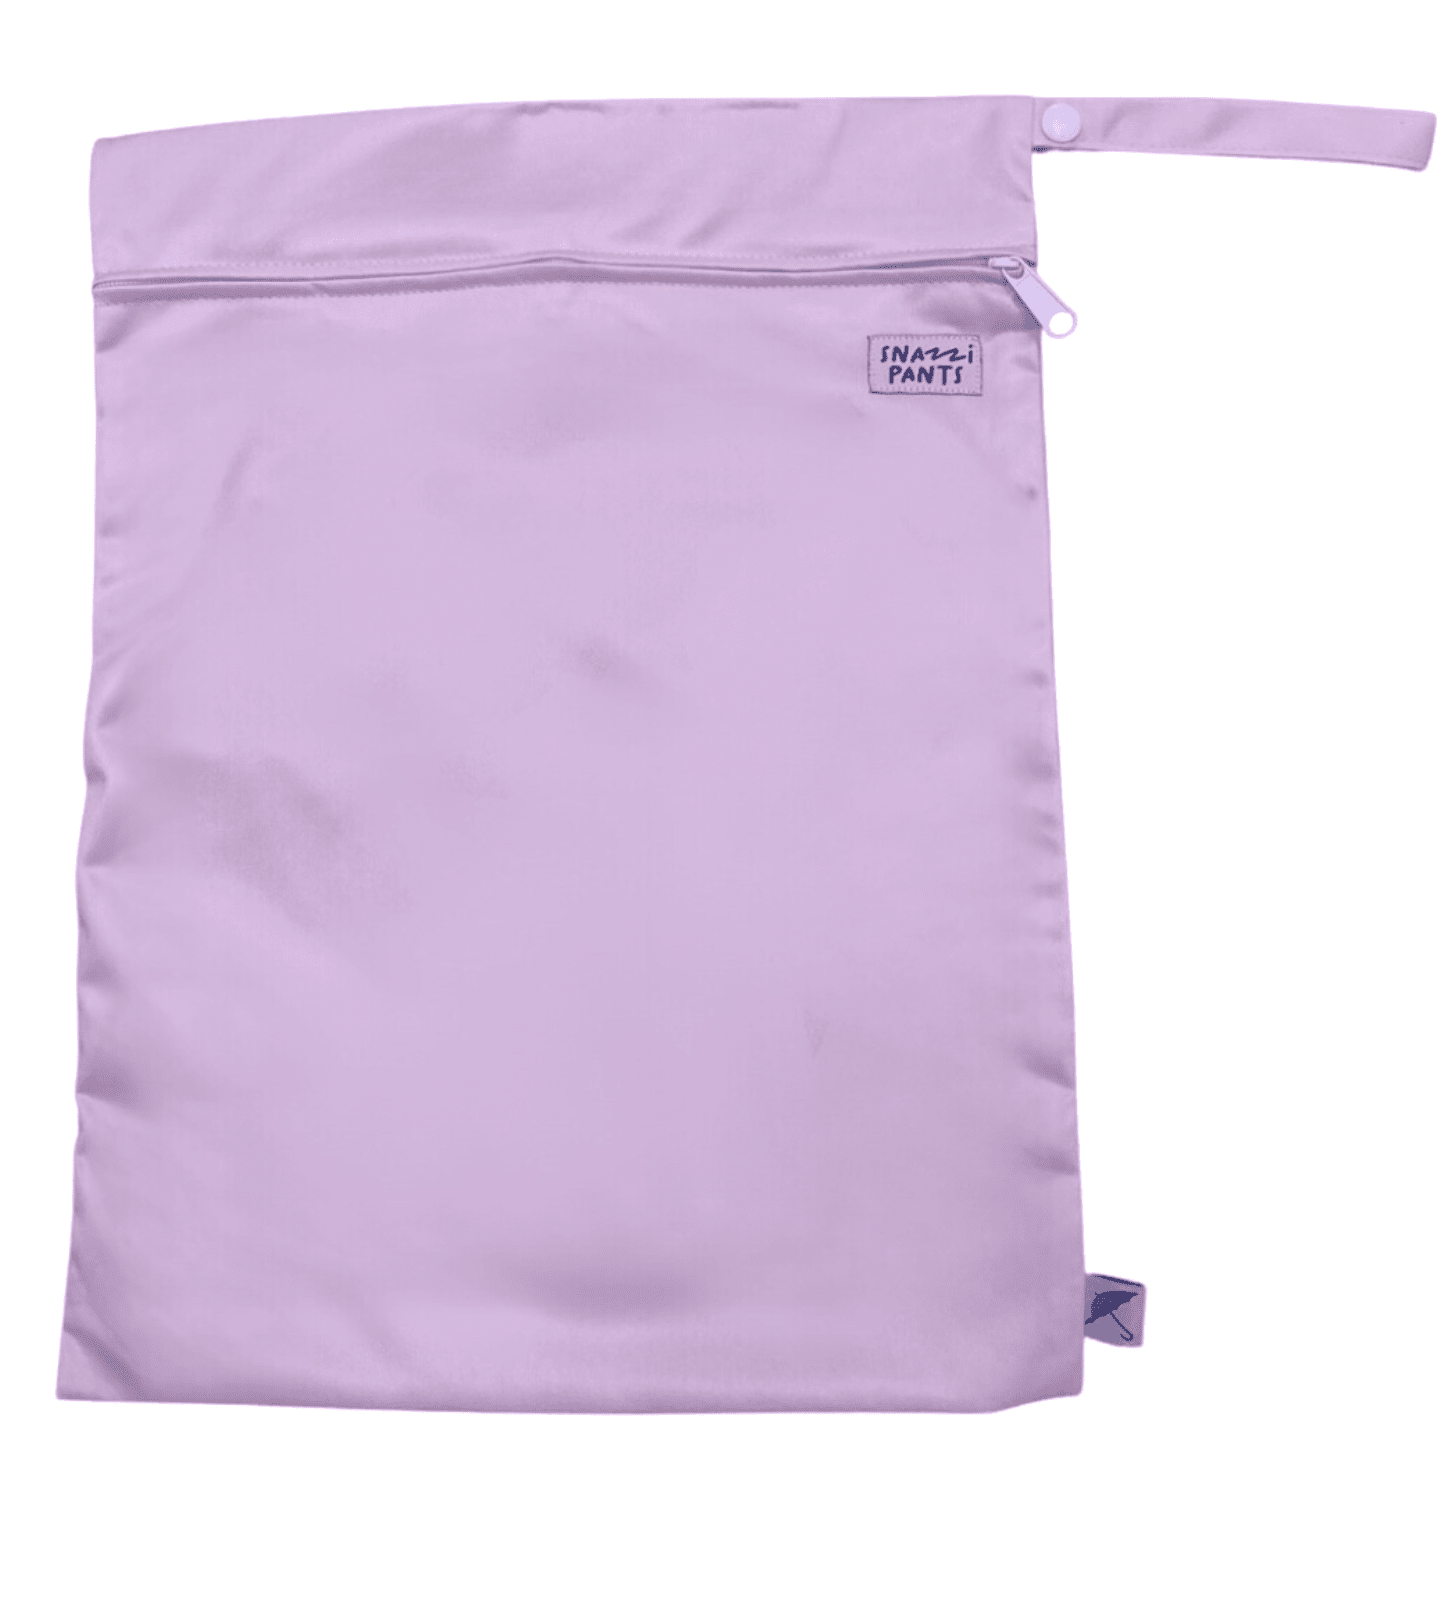 Wet Bag - Medium - Brolly Sheets AU